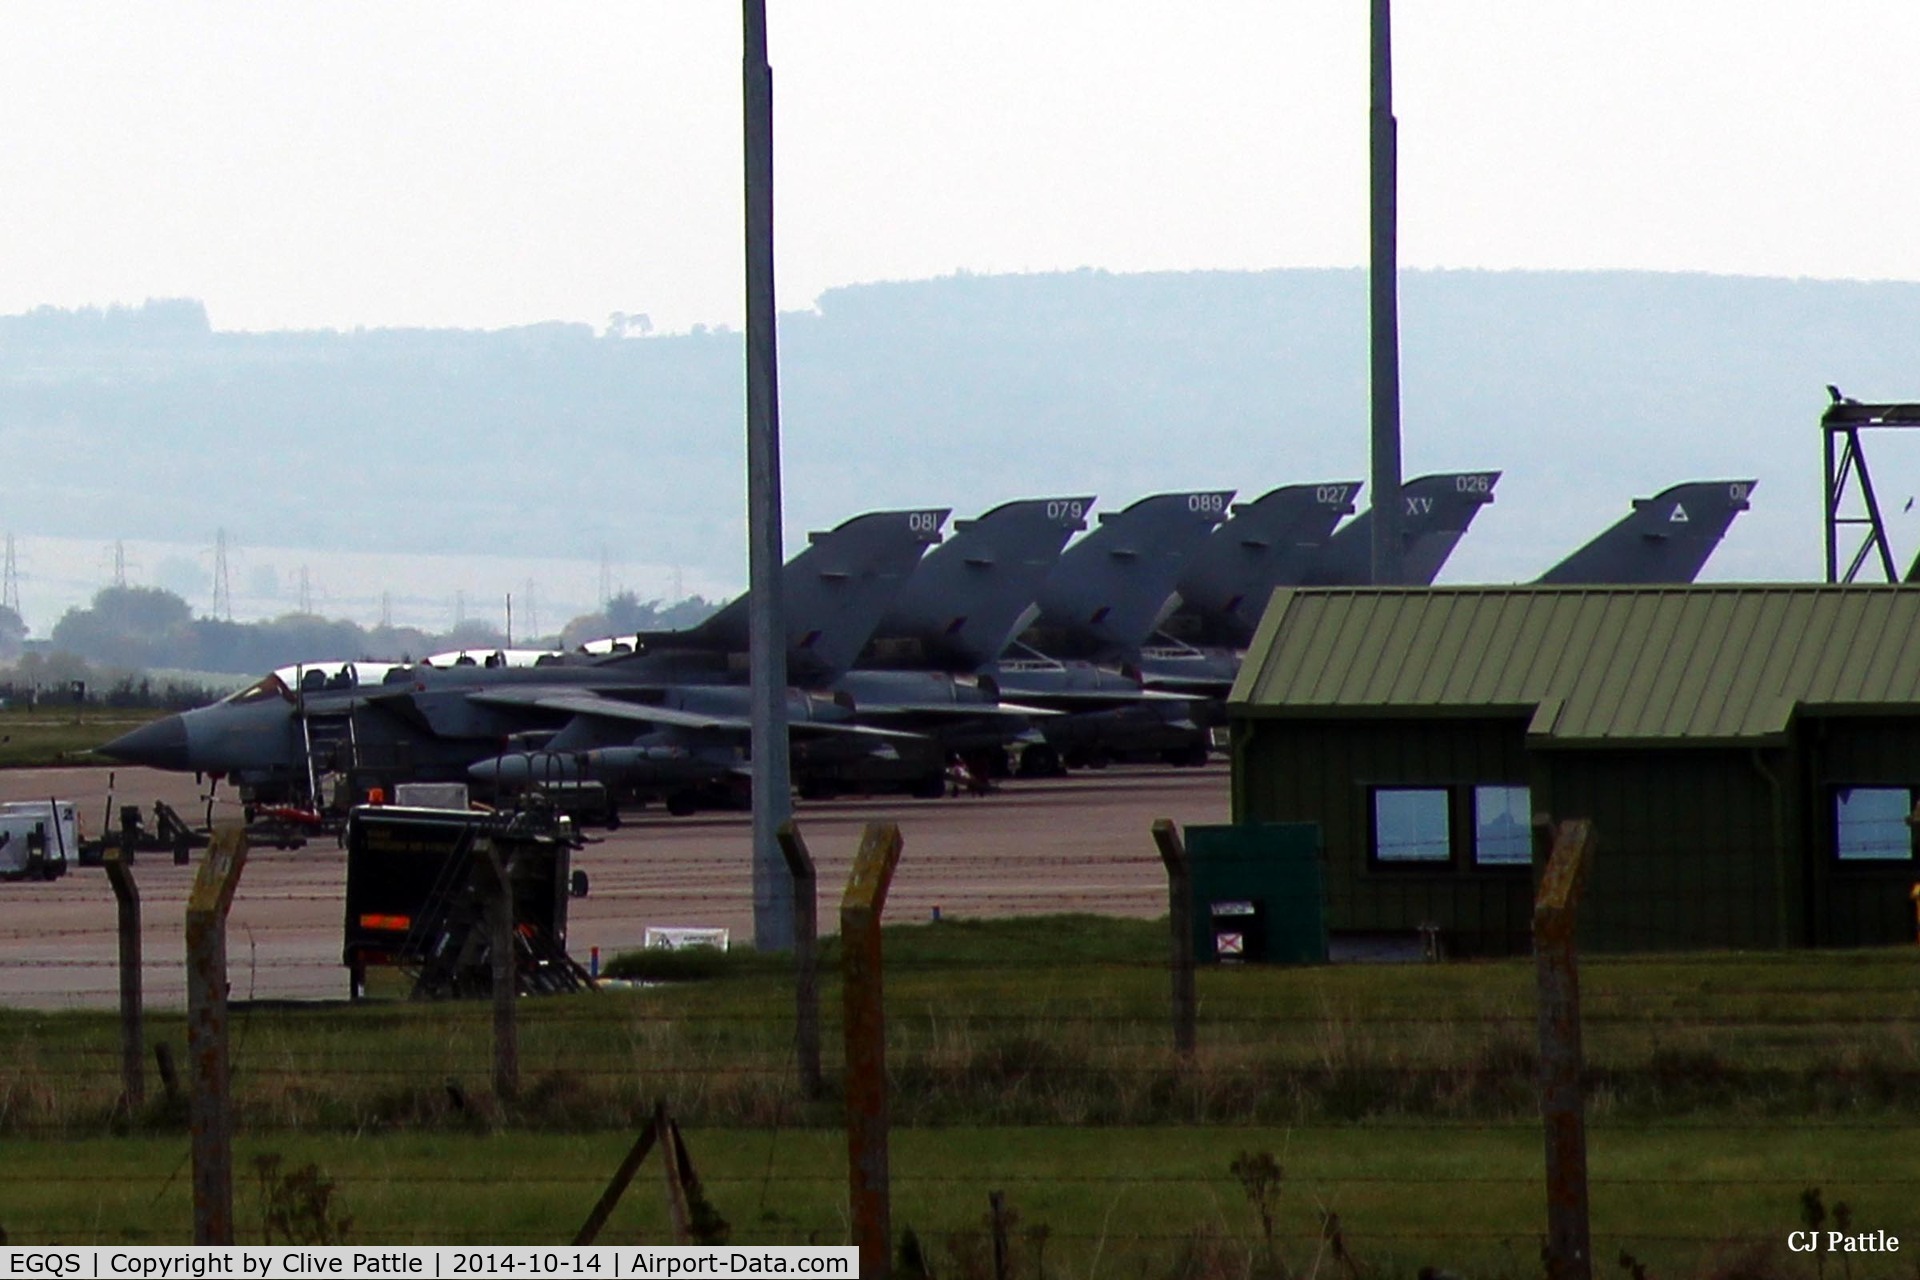 RAF Lossiemouth Airport, Lossiemouth, Scotland United Kingdom (EGQS) - A line-up of RAF 15 (R) Sqn Tornado GR.4 aircraft on their ramp at RAF Lossiemouth EGQS